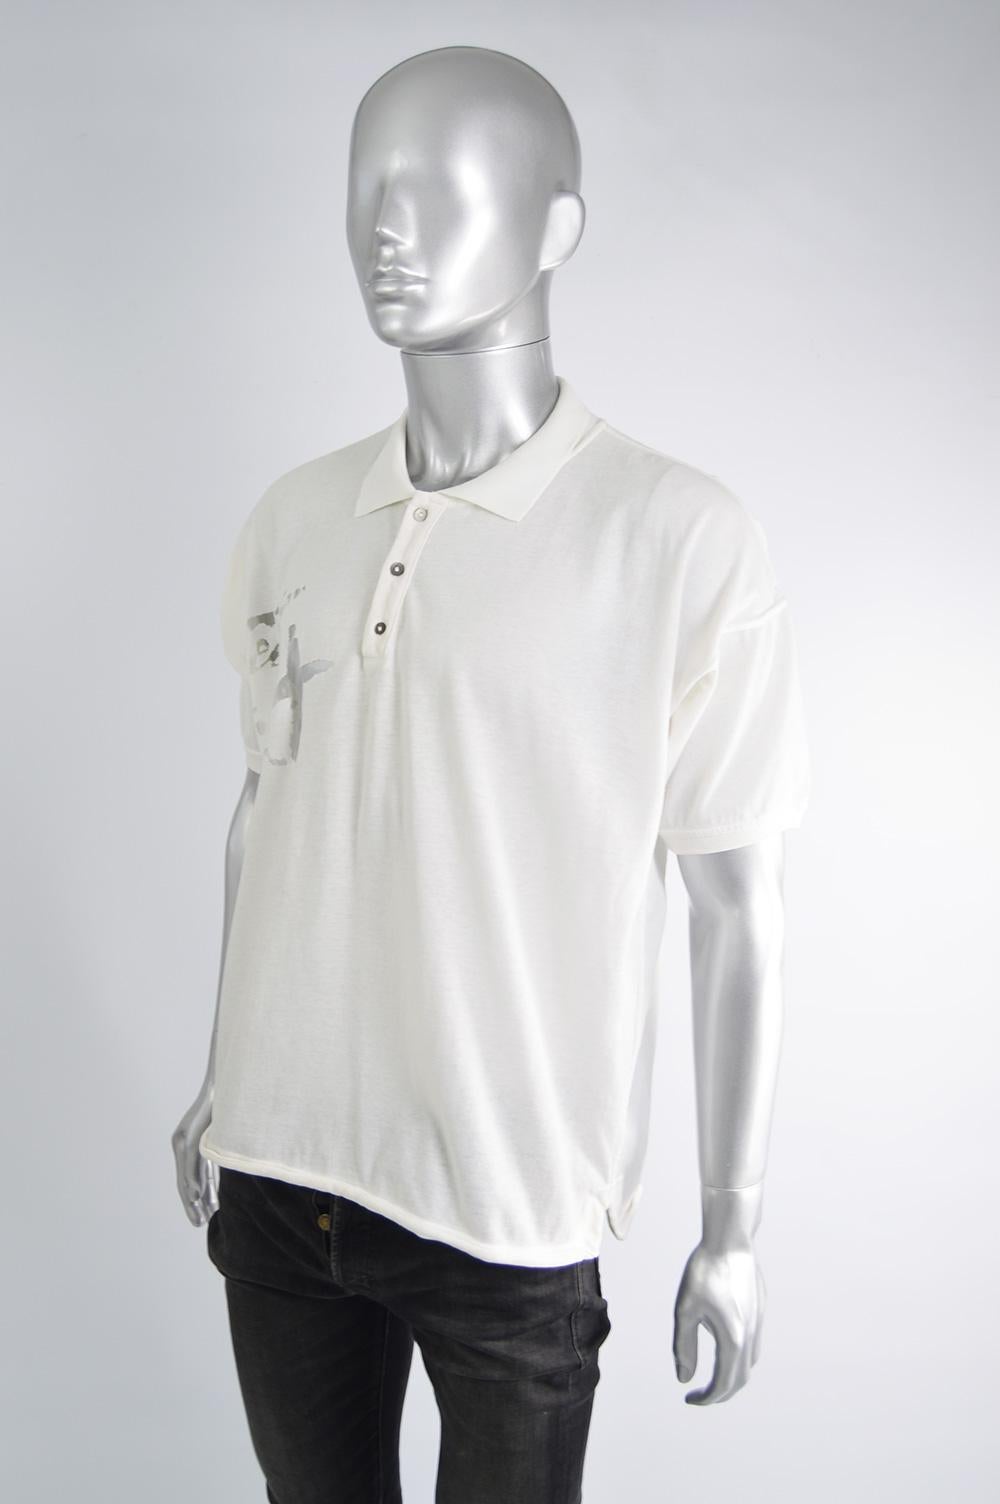 Calugi e Giannelli 'See Thru T-Shirt Man' Vintage Cotton Knit Polo Shirt, 1980s 1